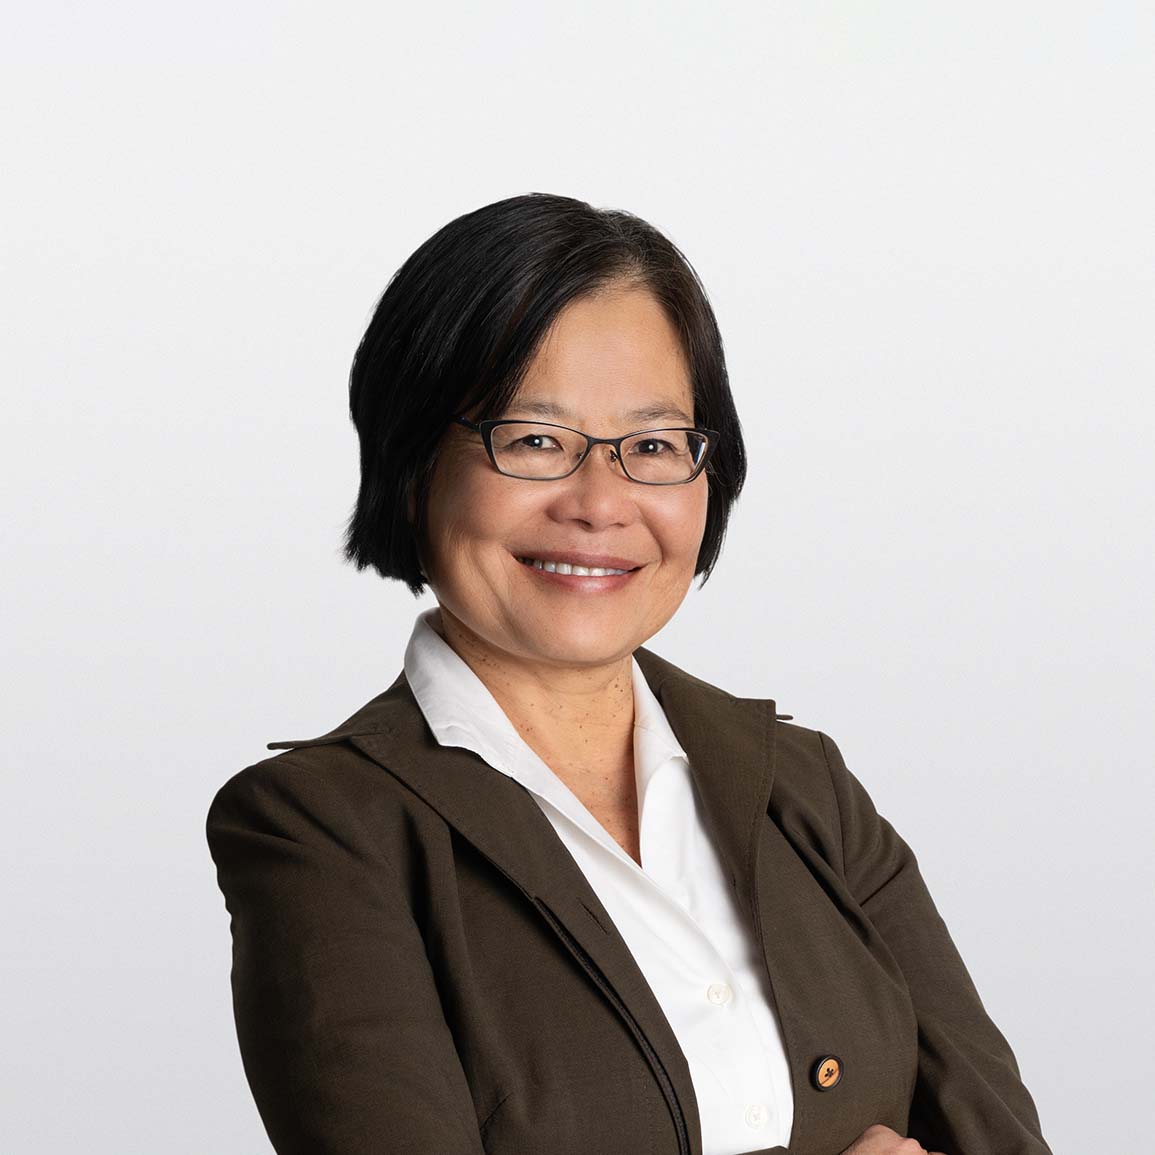 Image of Josephine Cosco senior financial advisor on white background